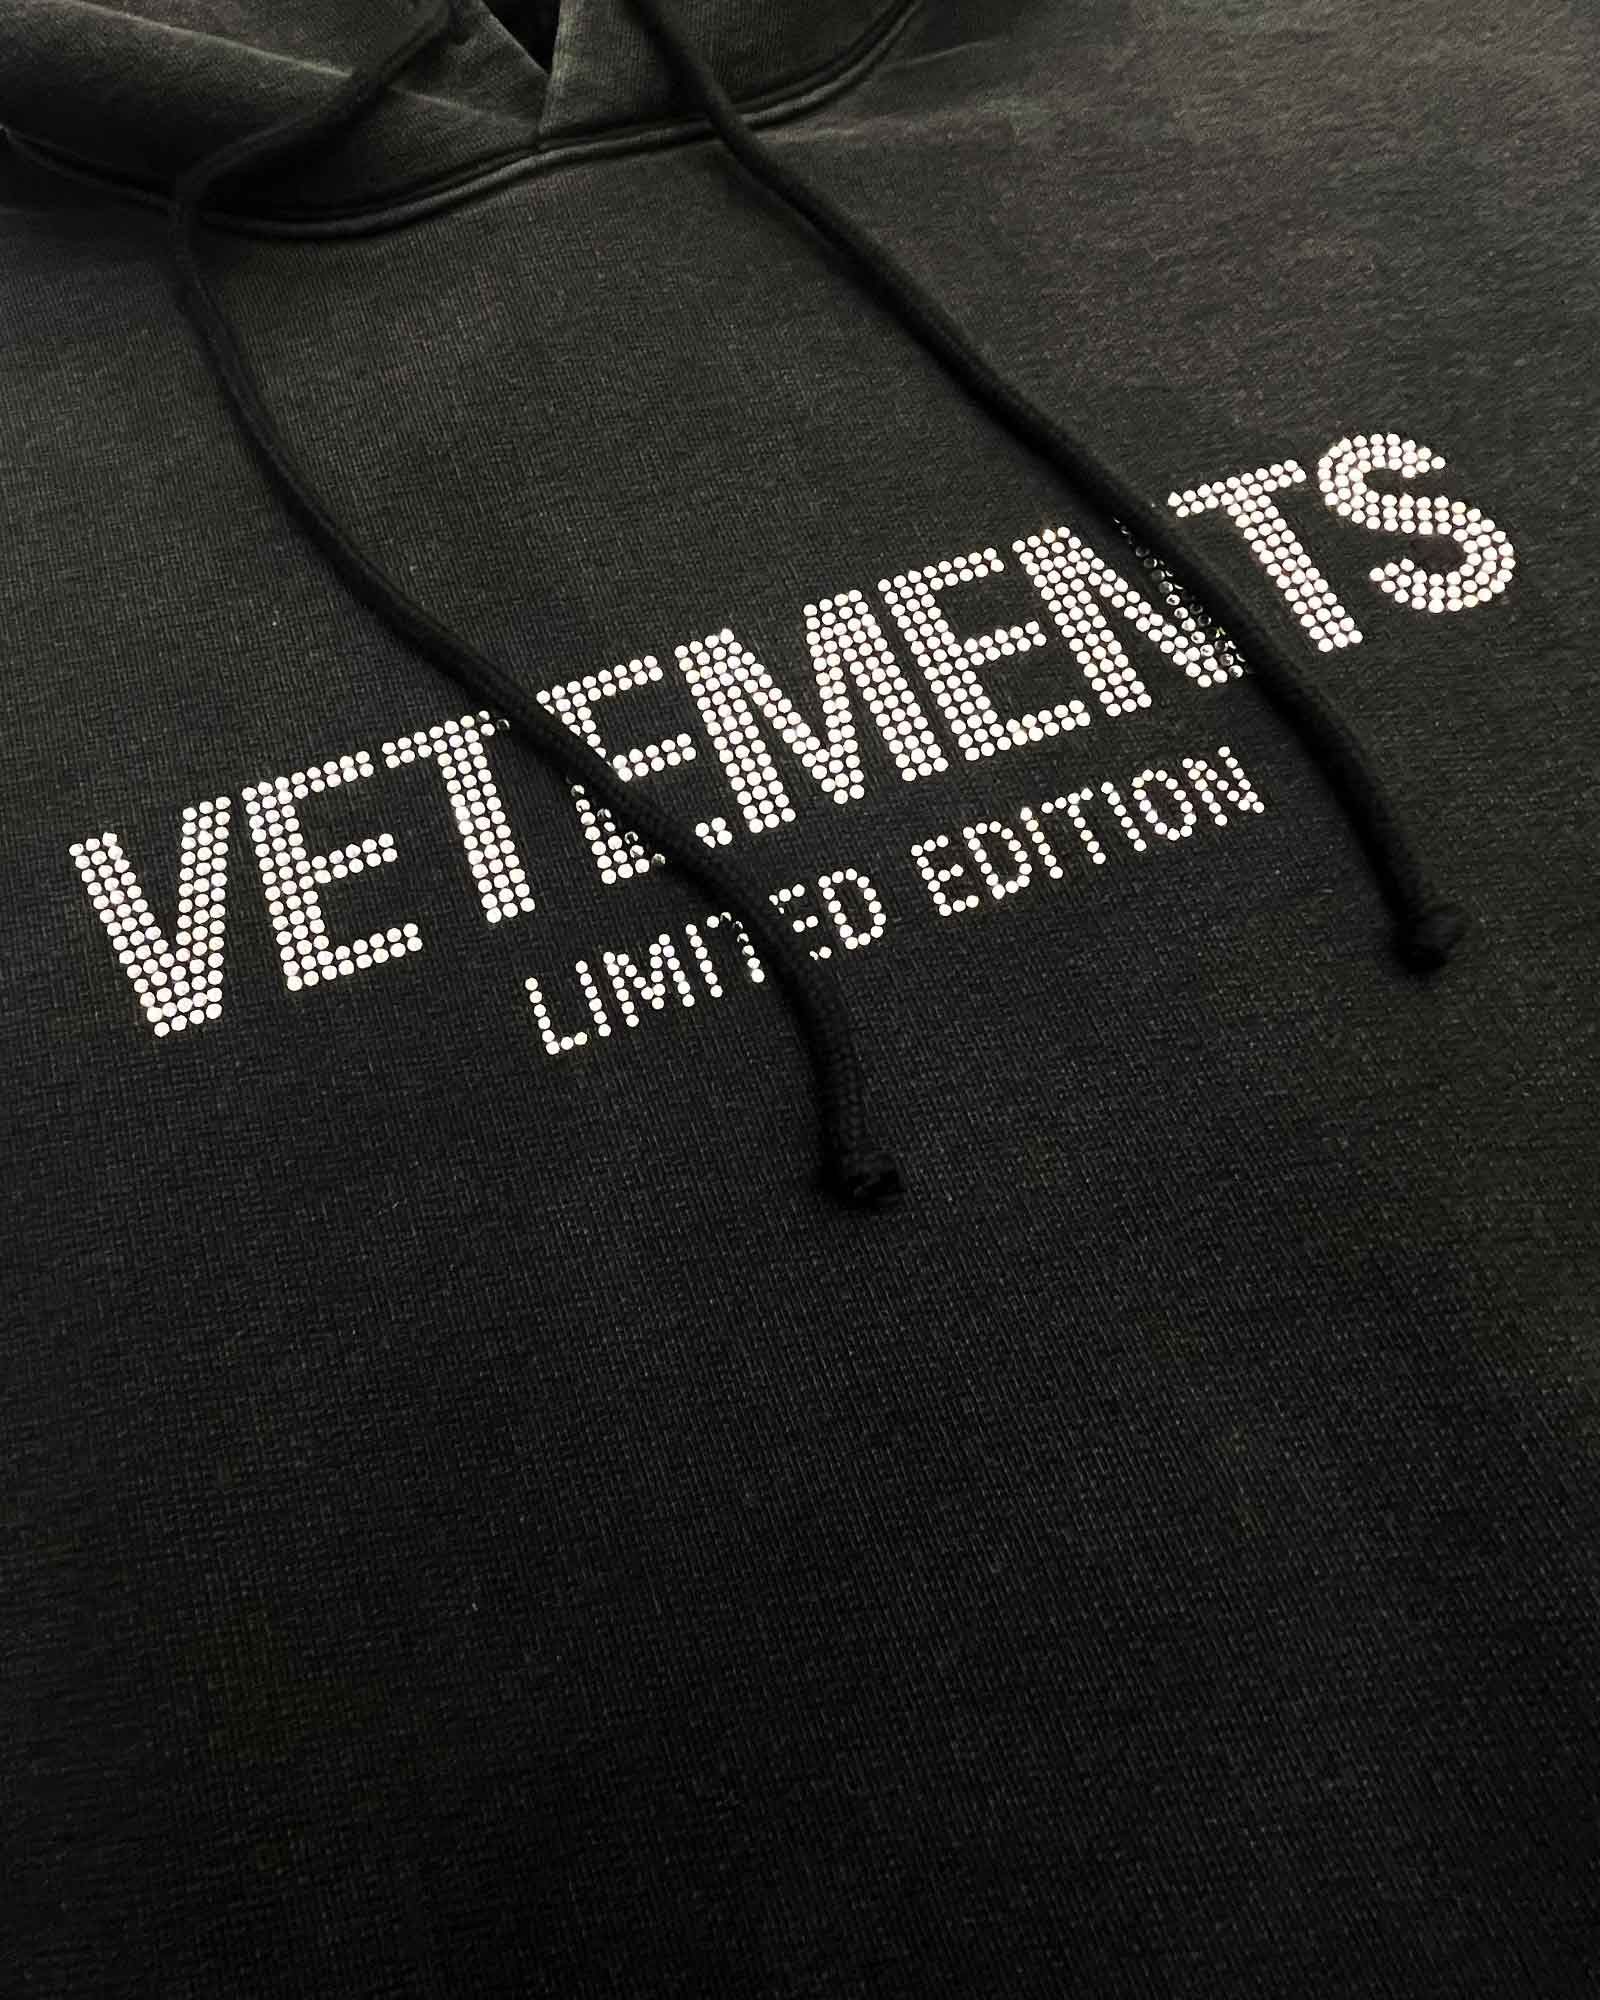 VETEMENTS - ヴェトモン/Limited edition crystal logo hoodie/プル